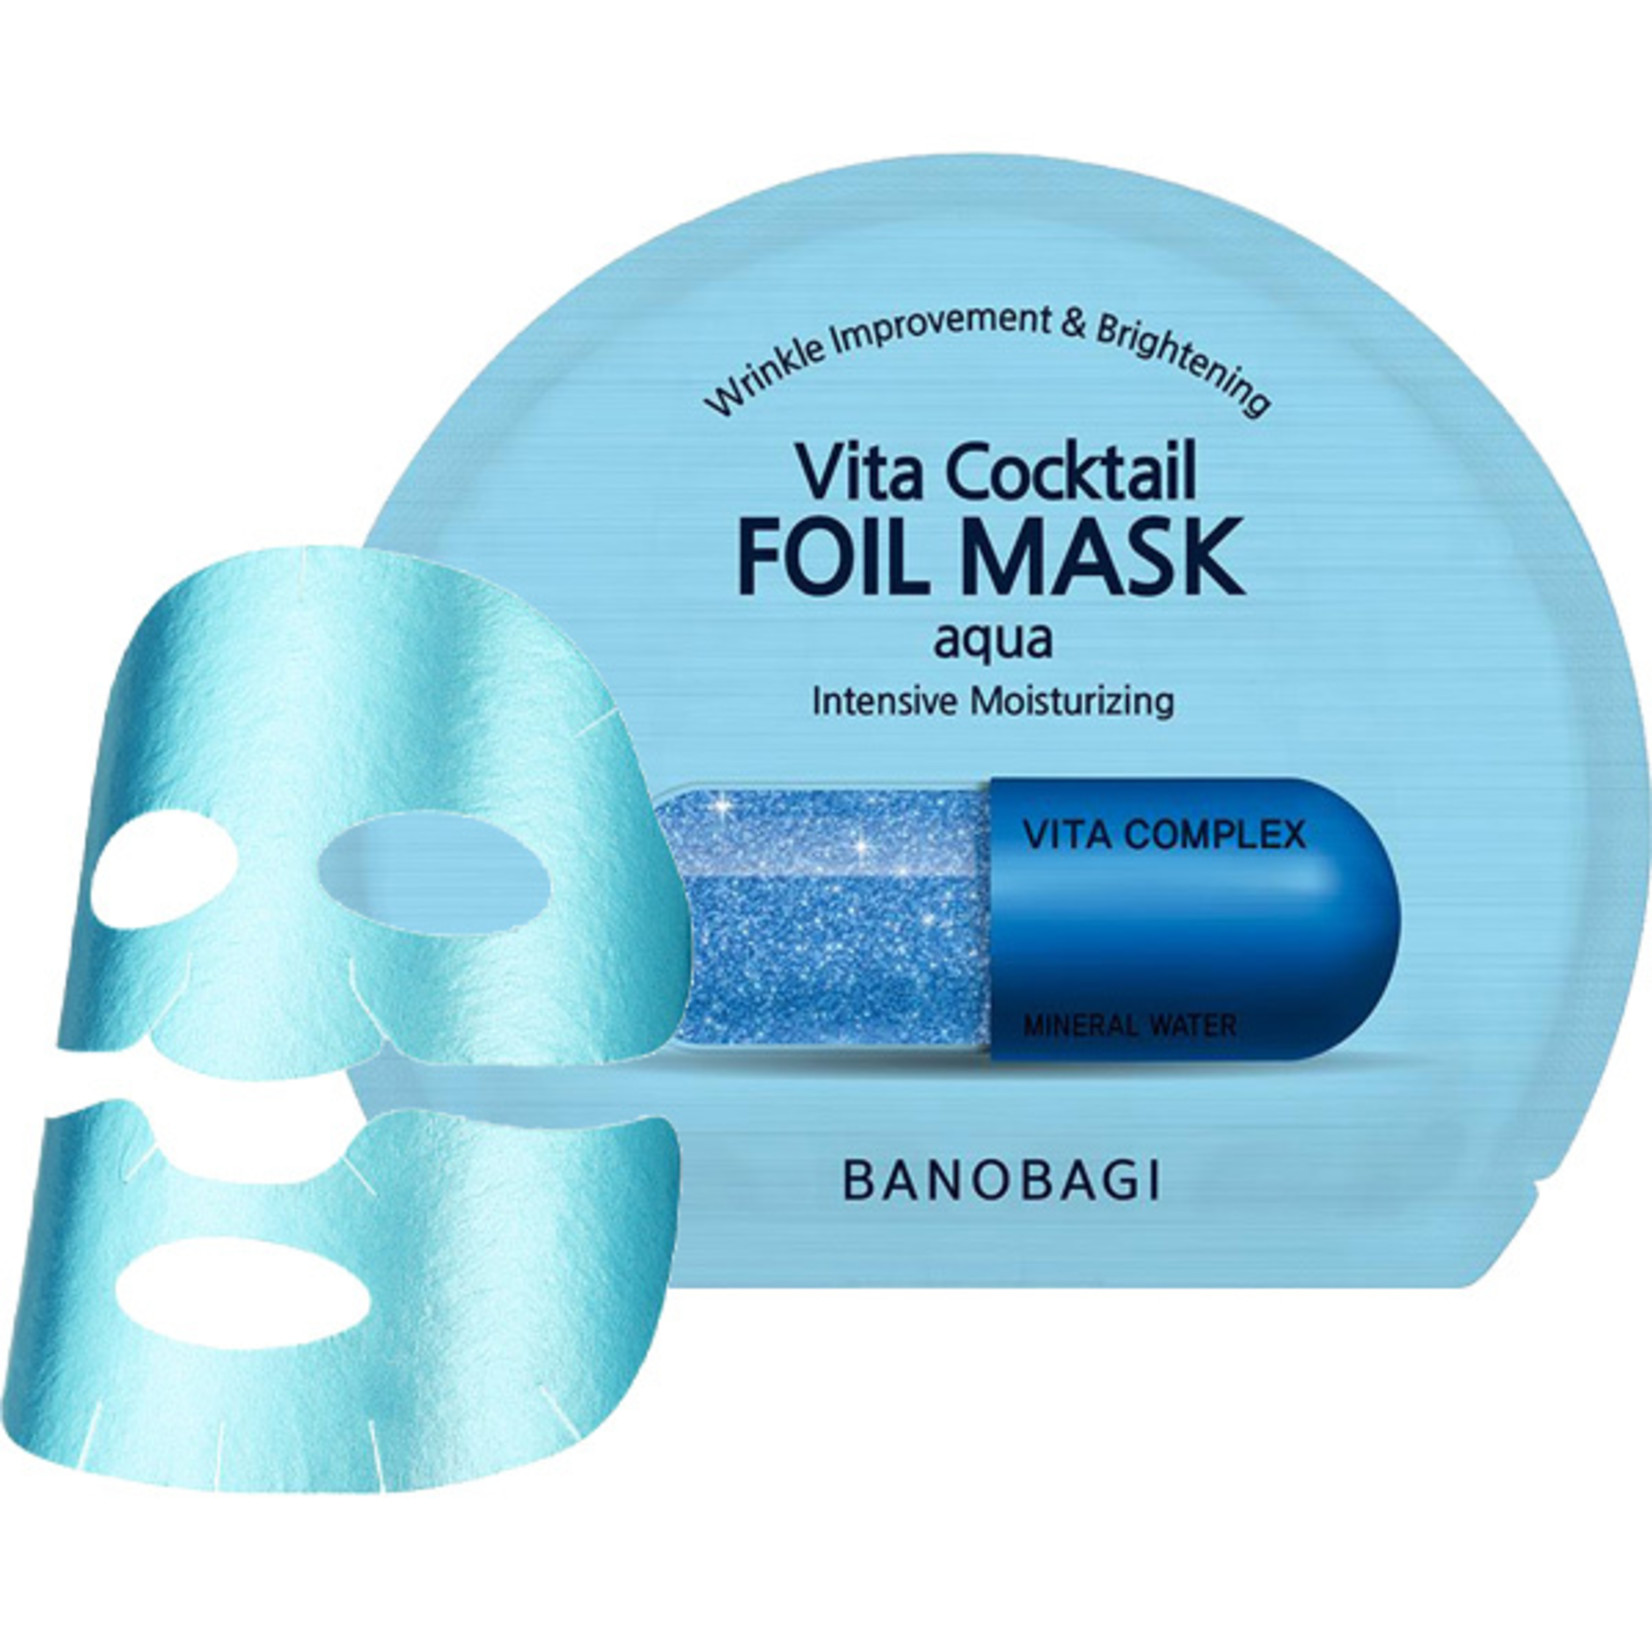 BANOBAGI Vita Cocktail Foil Mask Aqua